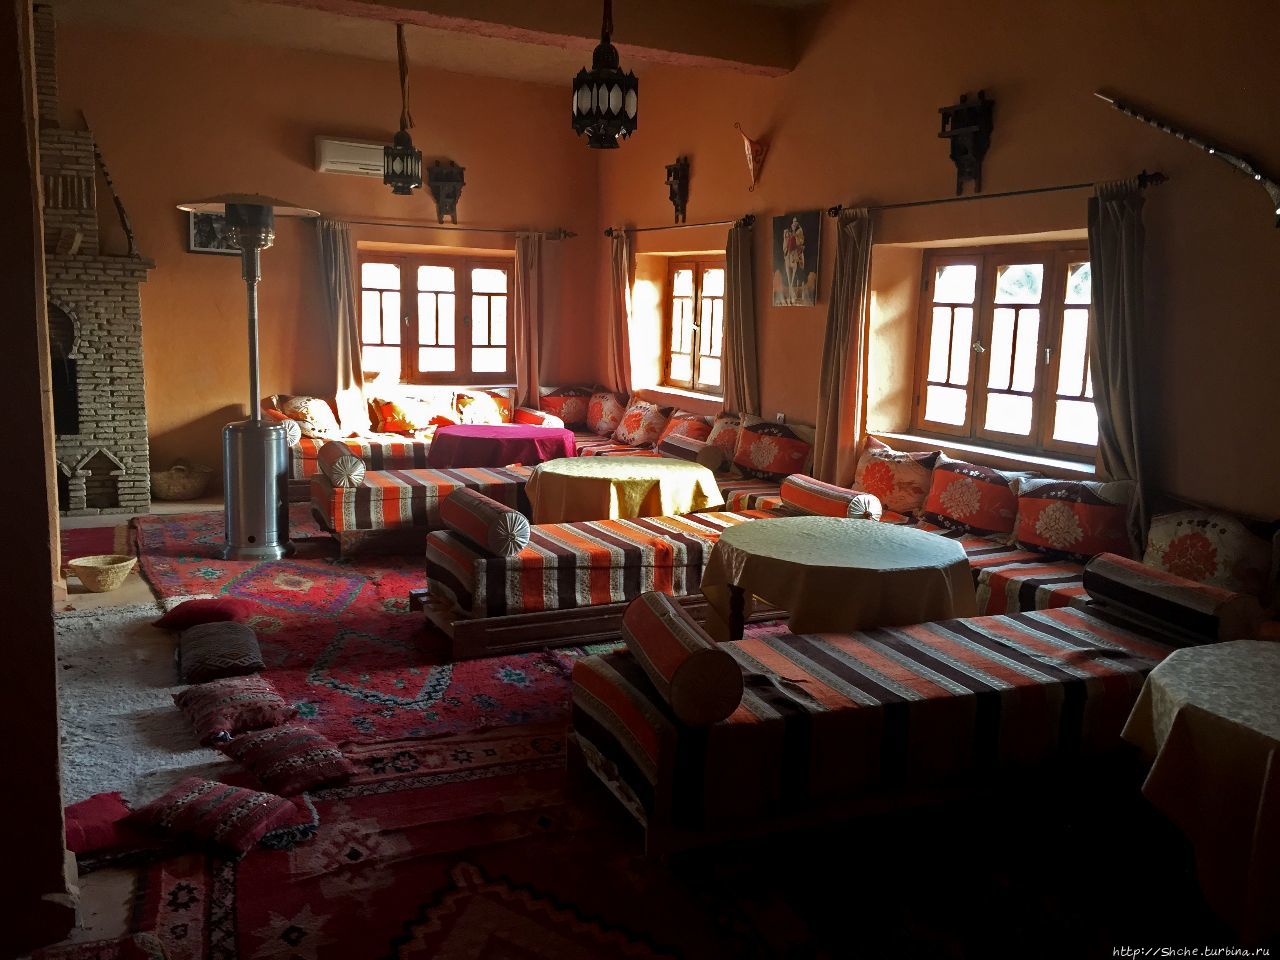 Отель Ксар Мерзуга Хассилабиед, Марокко